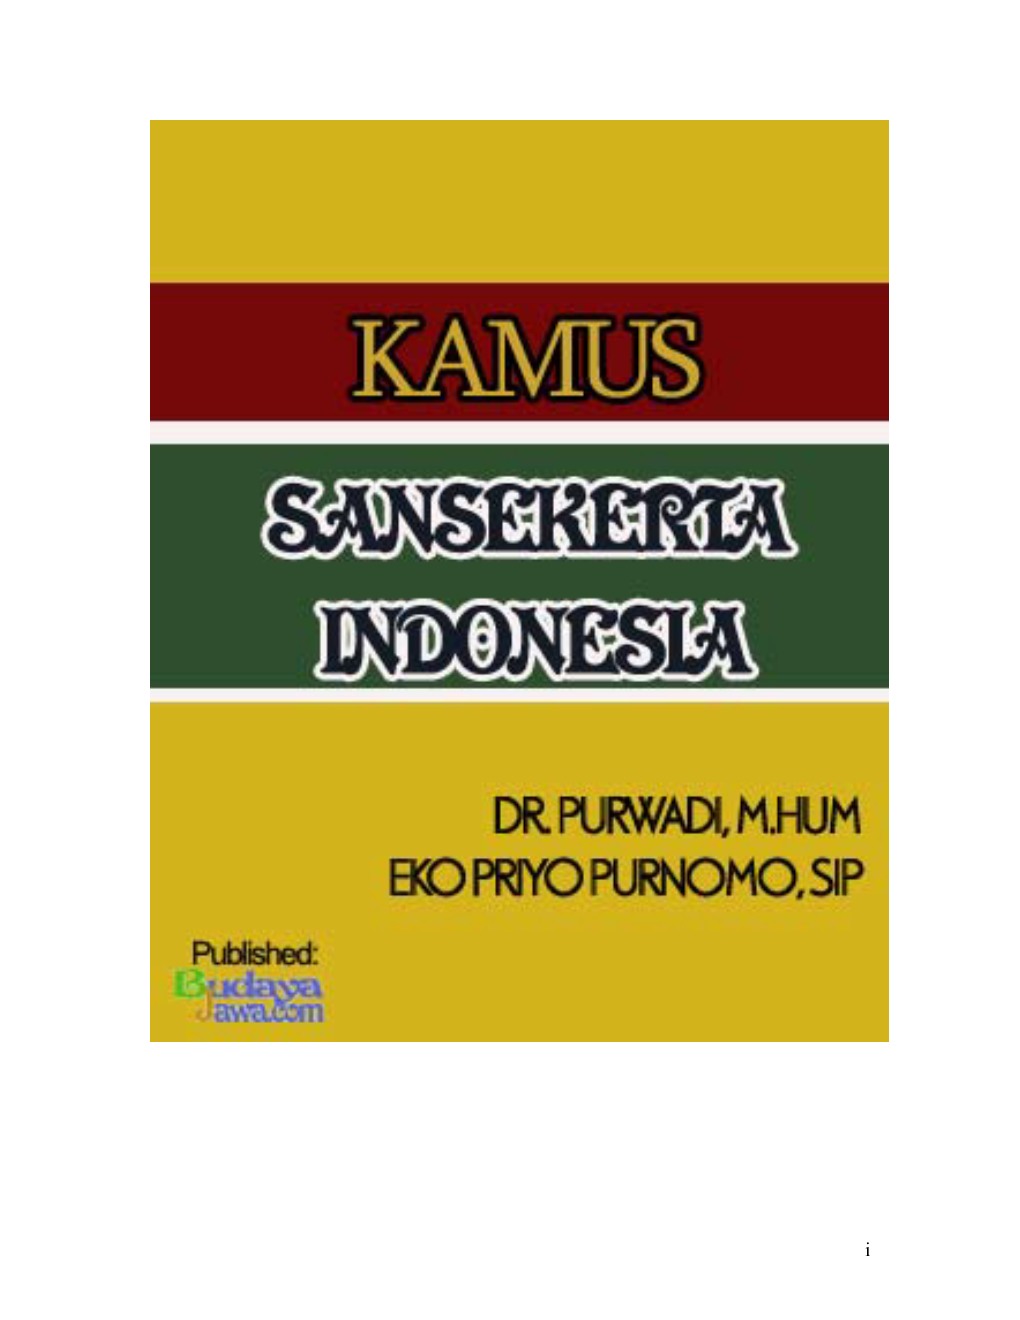 Kamus Sansekerta Indonesia